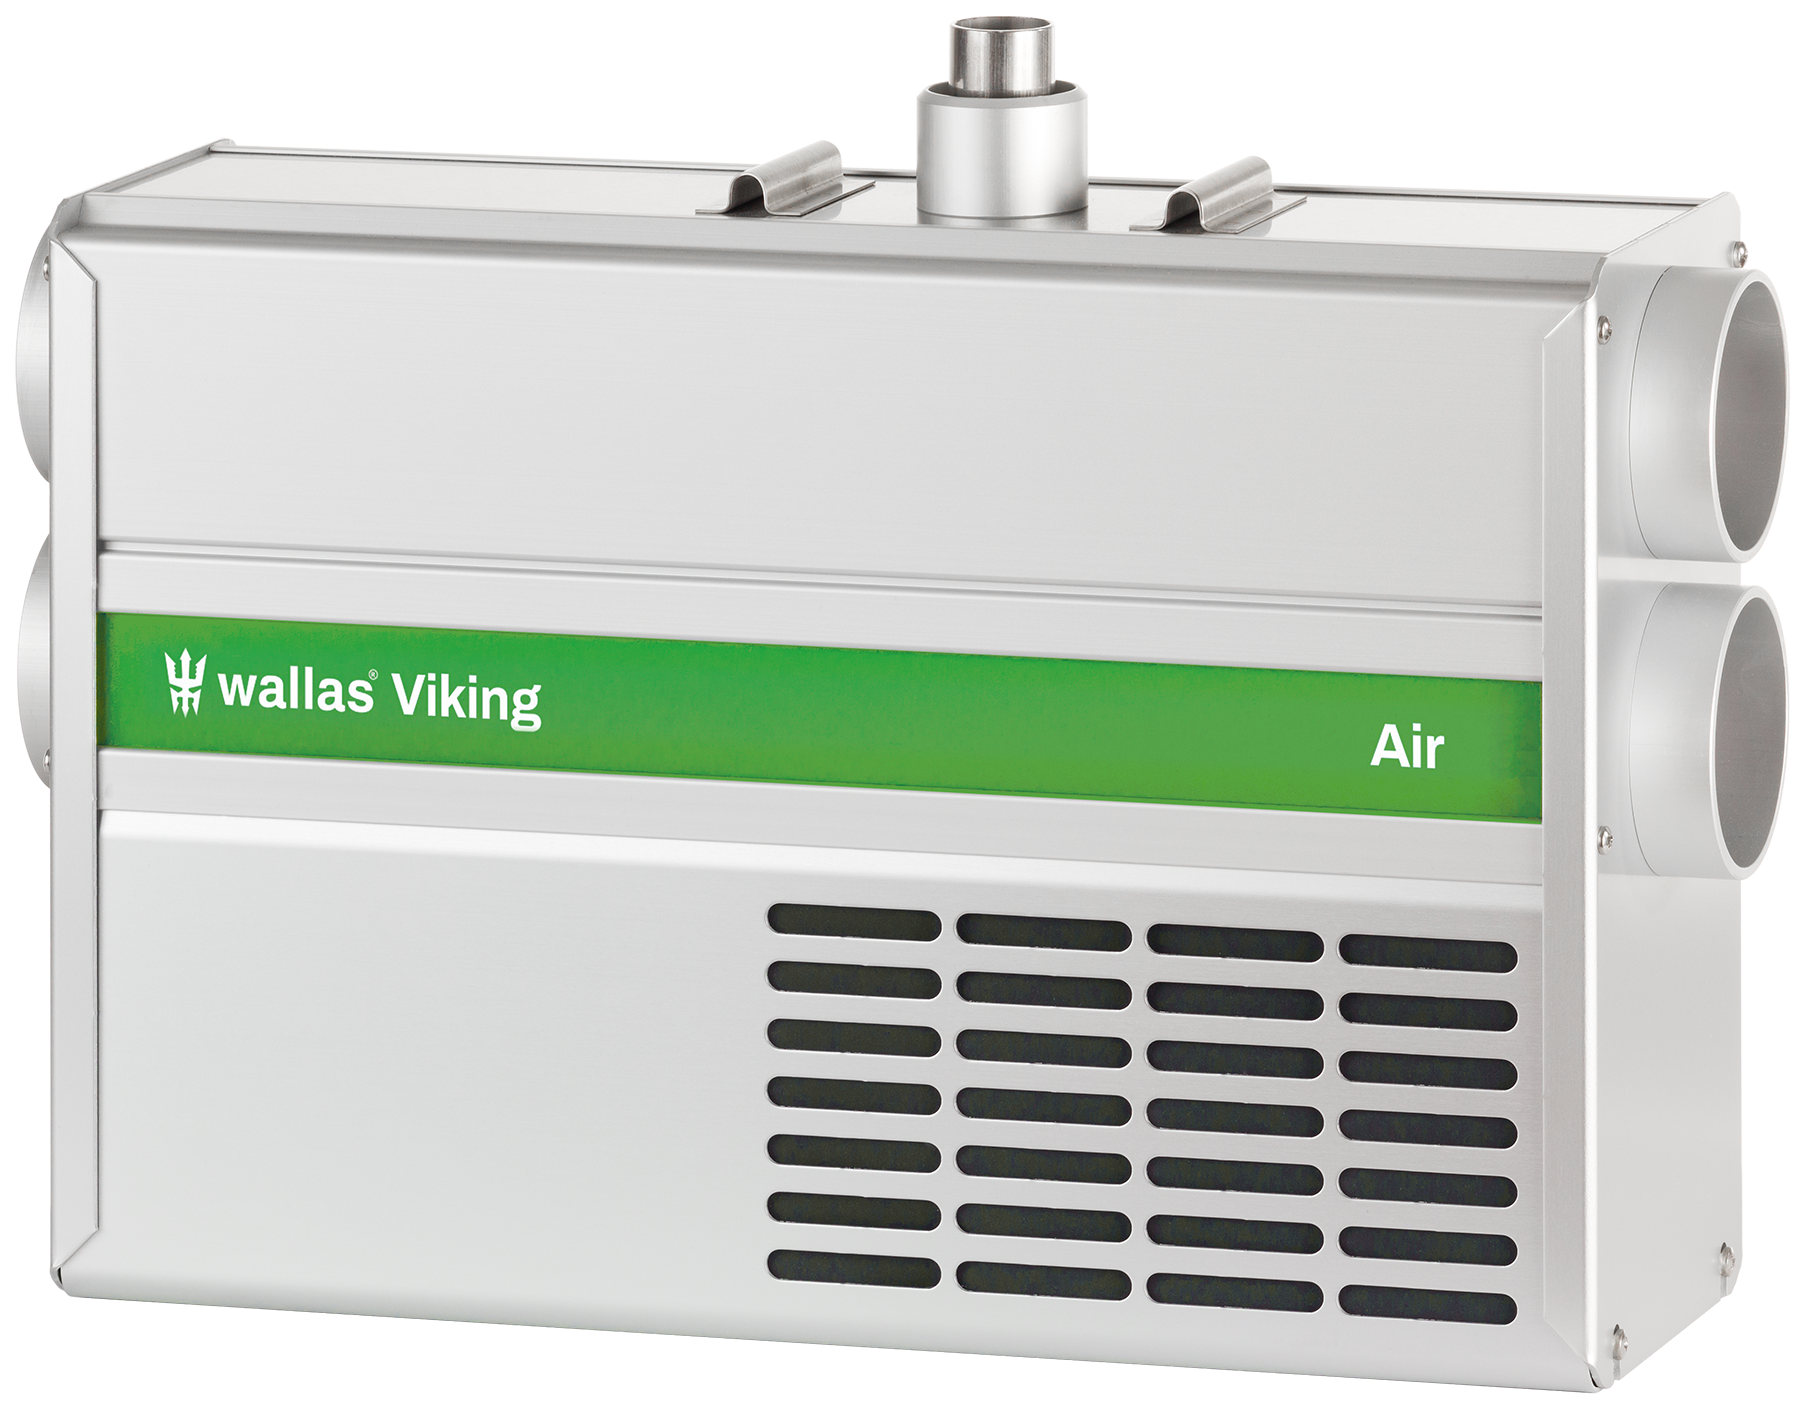 Wallas Viking Air Diesel Heater with Control Panel